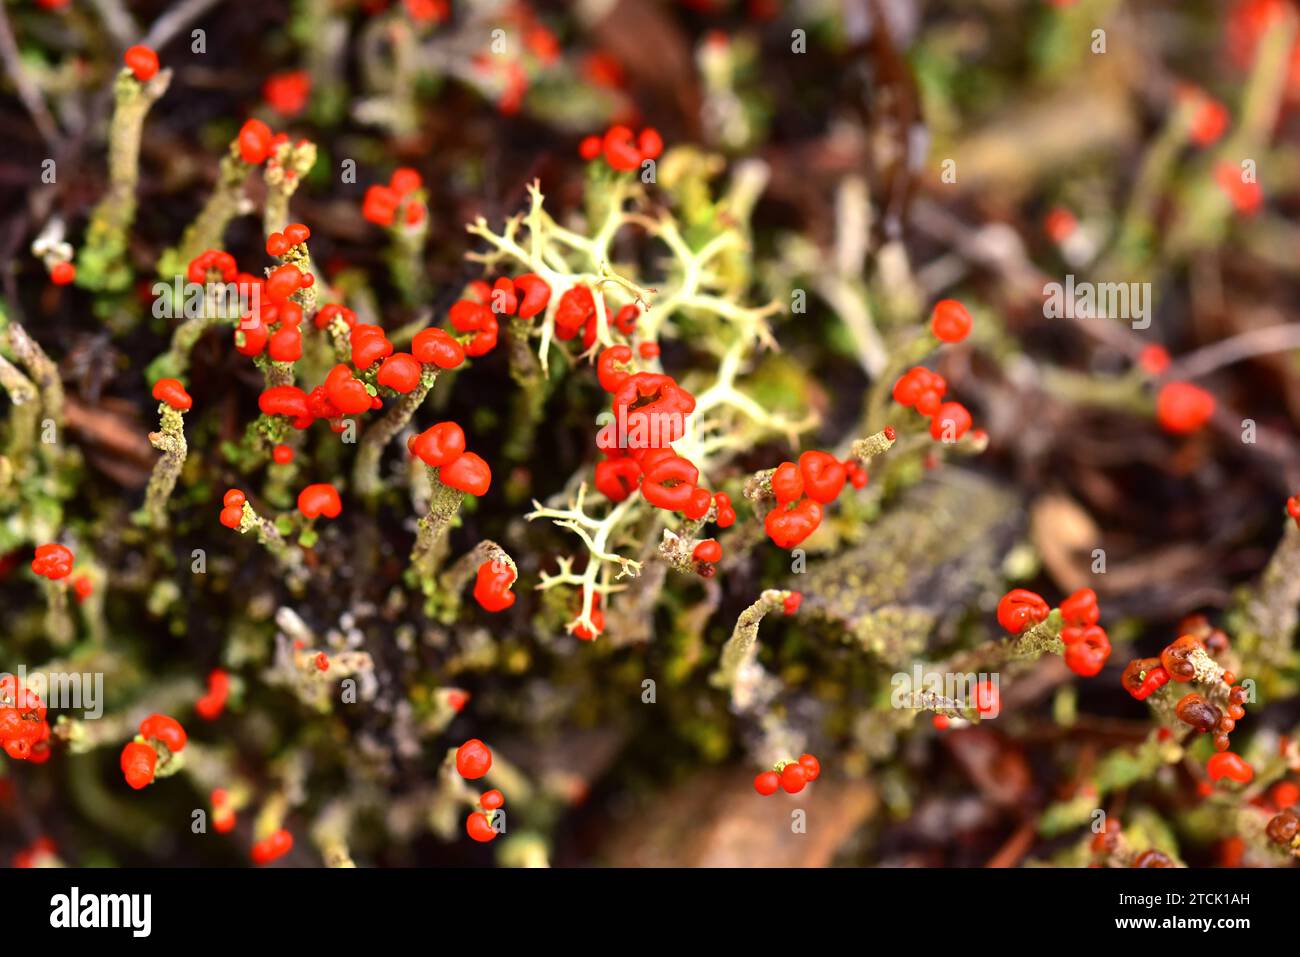 Cladonia macilenta is a squamulose lichen with red apothecia. This photo was taken in Muniellos Biosphere Reserve, Asturias, Spain. Stock Photo